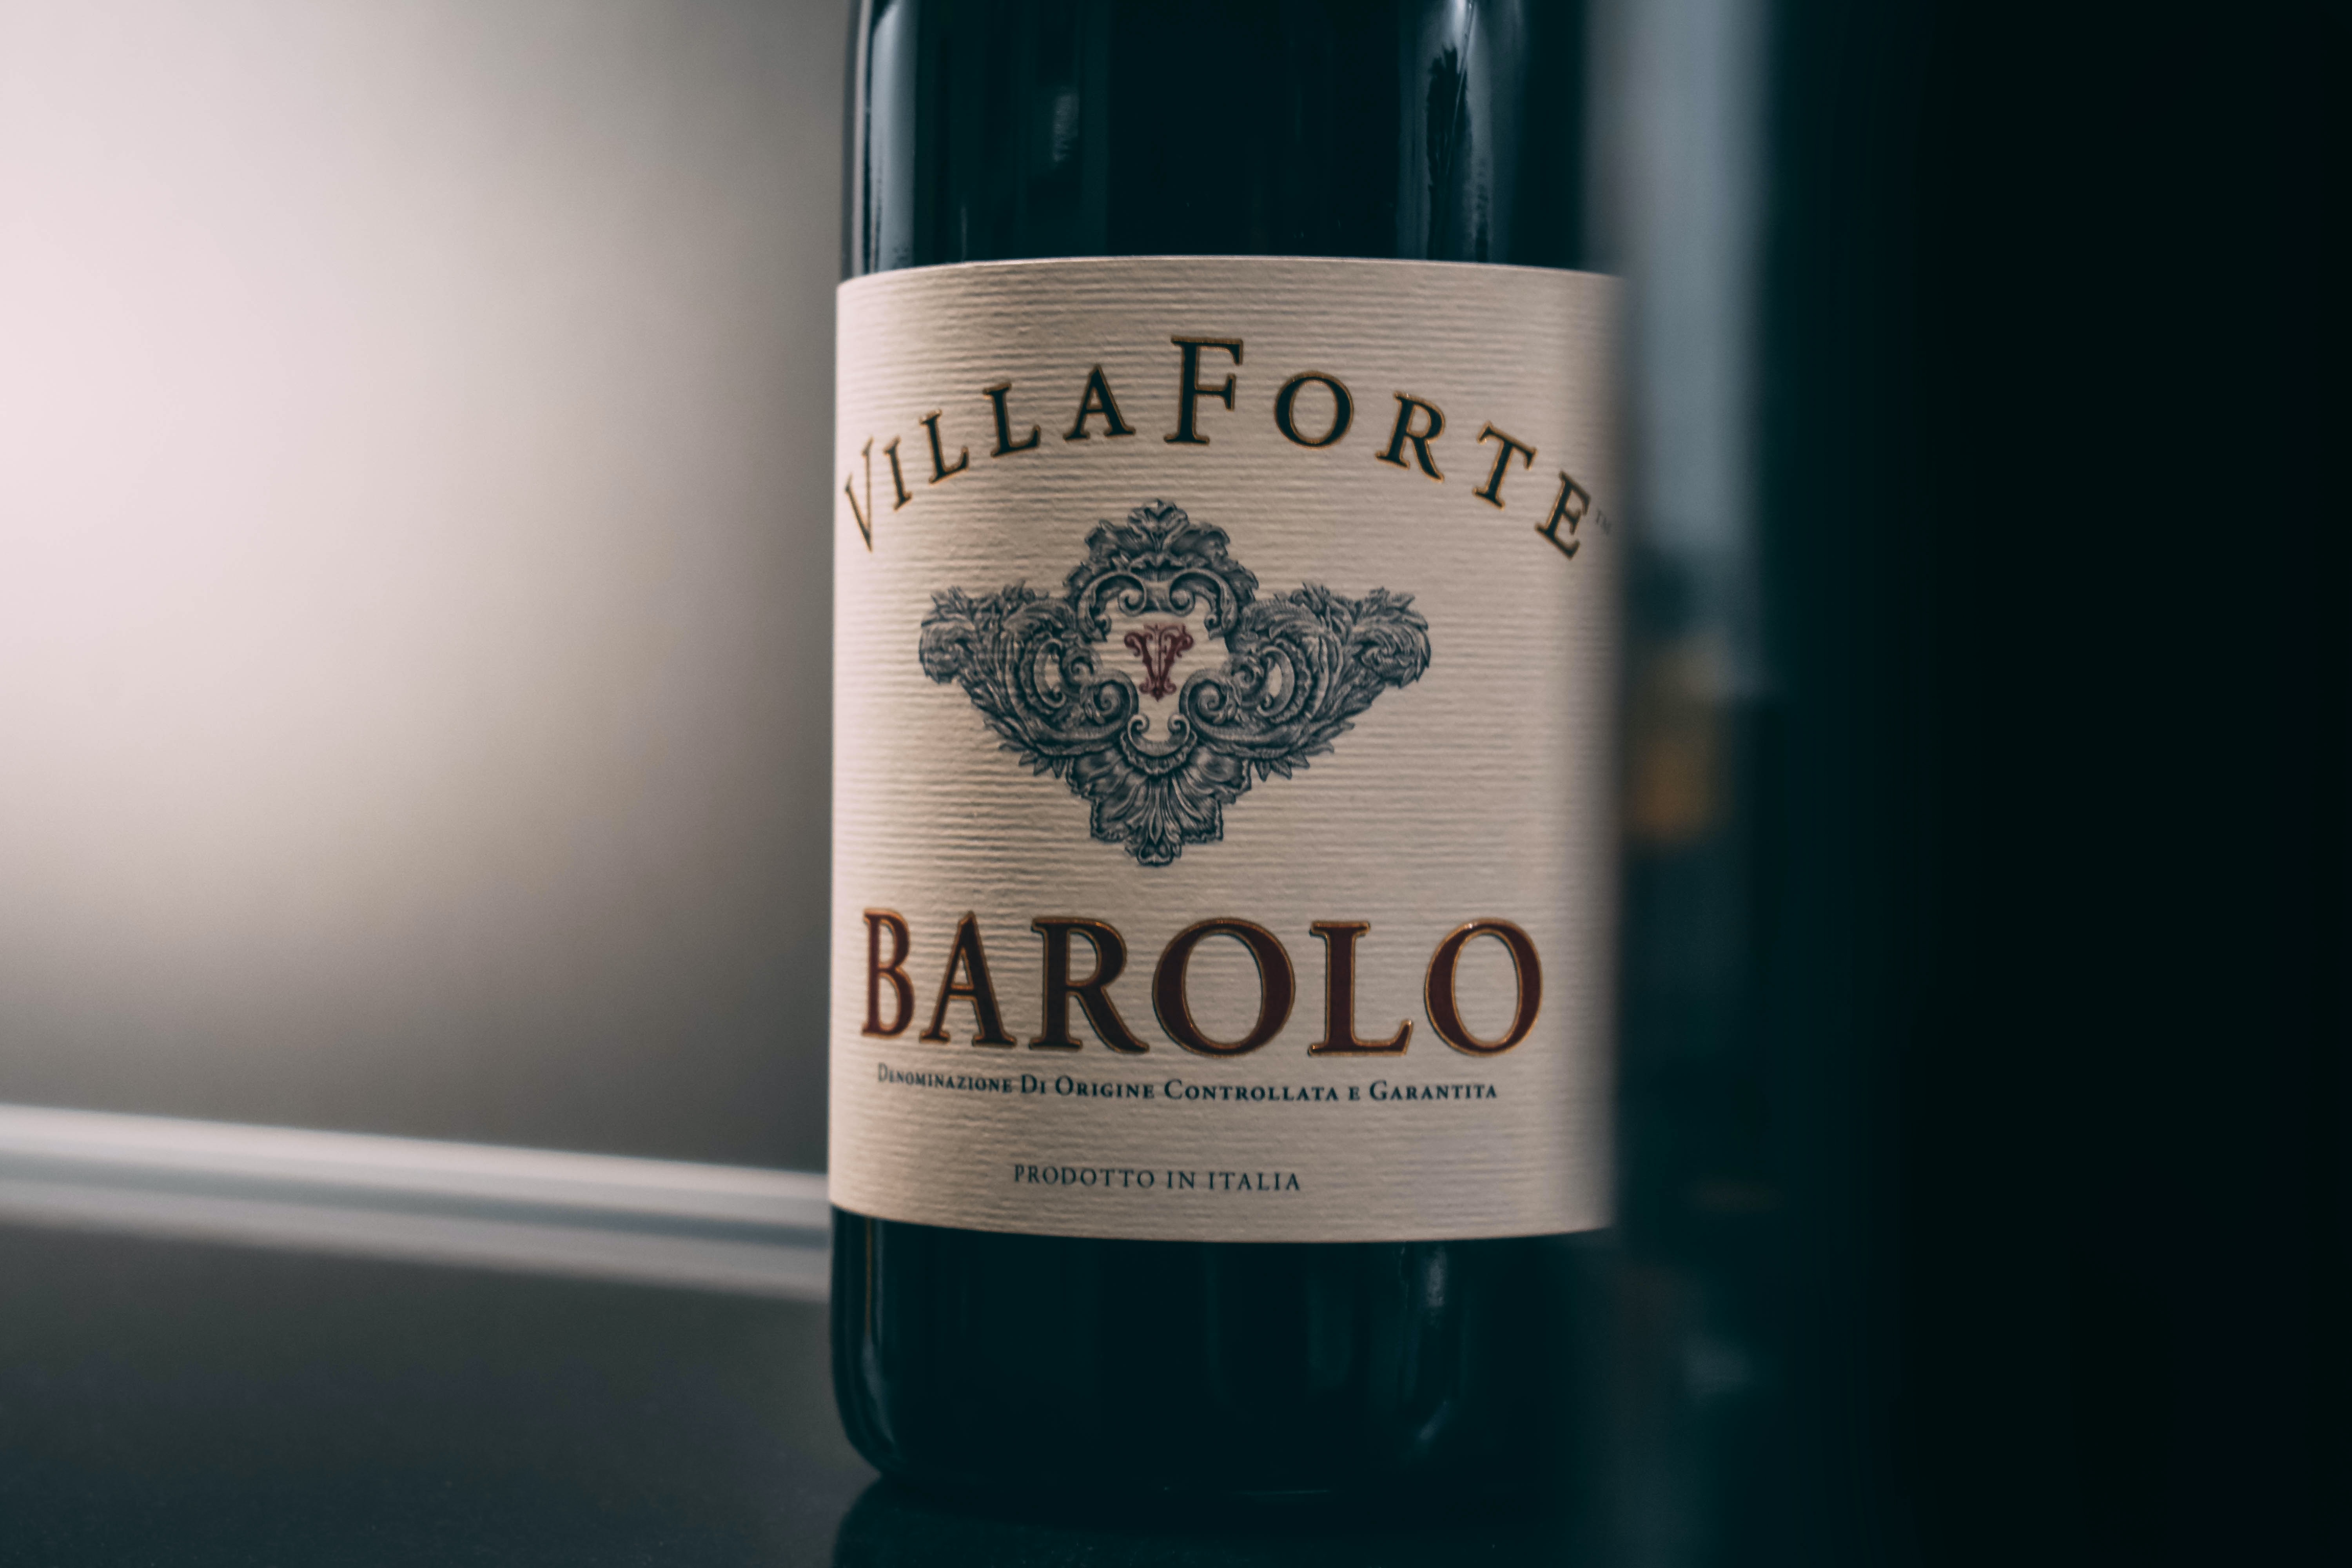 barolo wijnfle